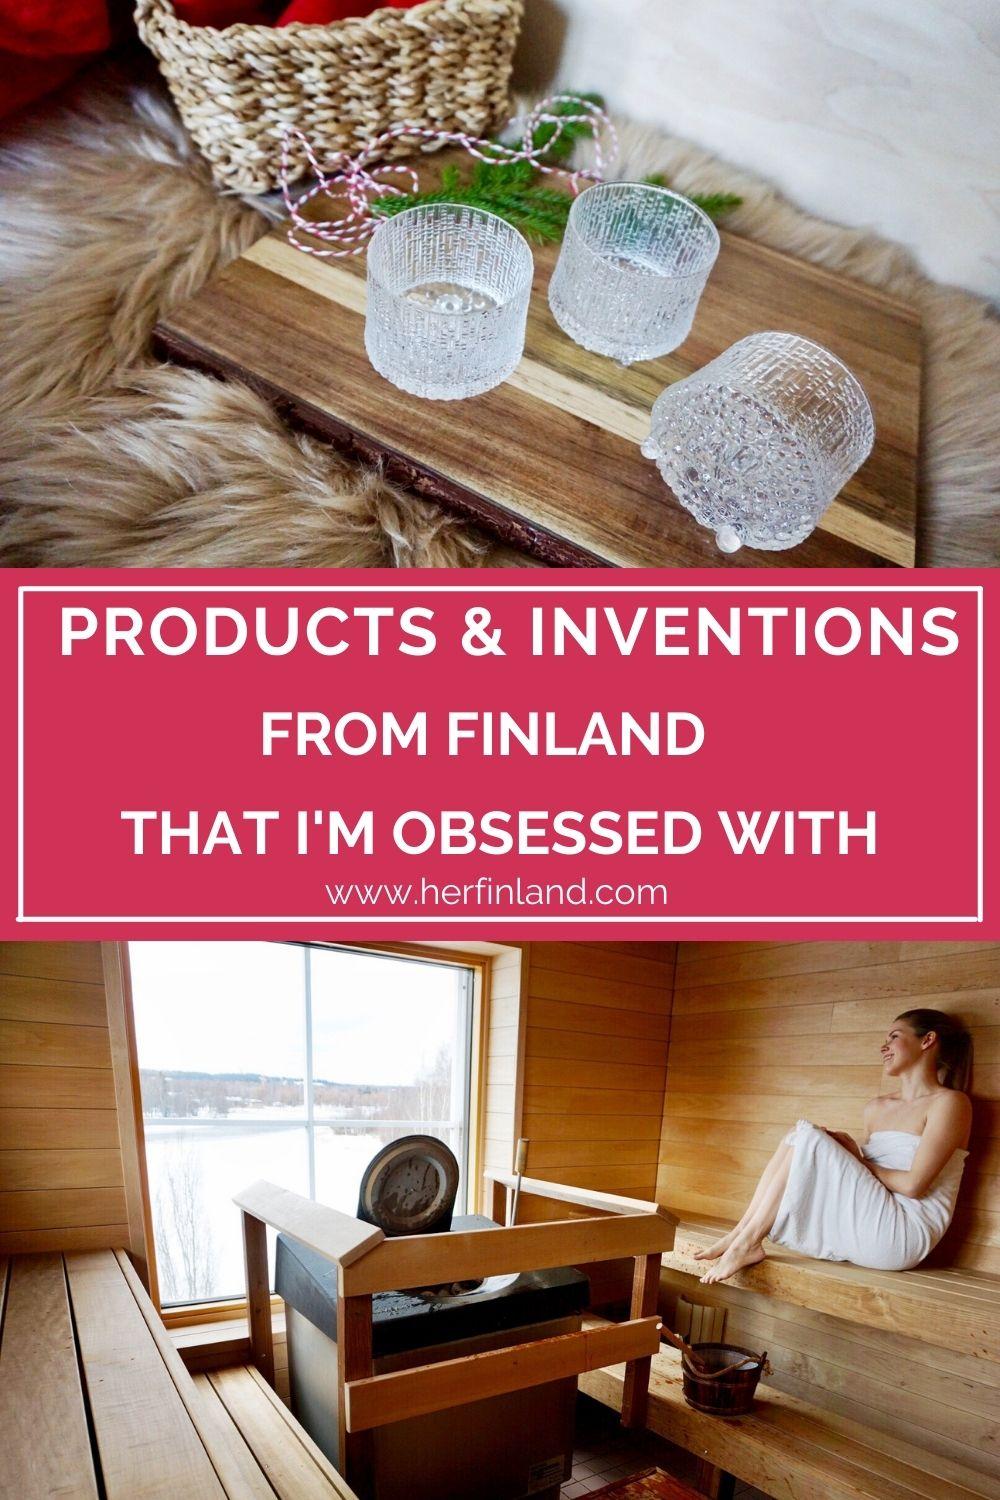 Finnish glassware and Finnish sauna